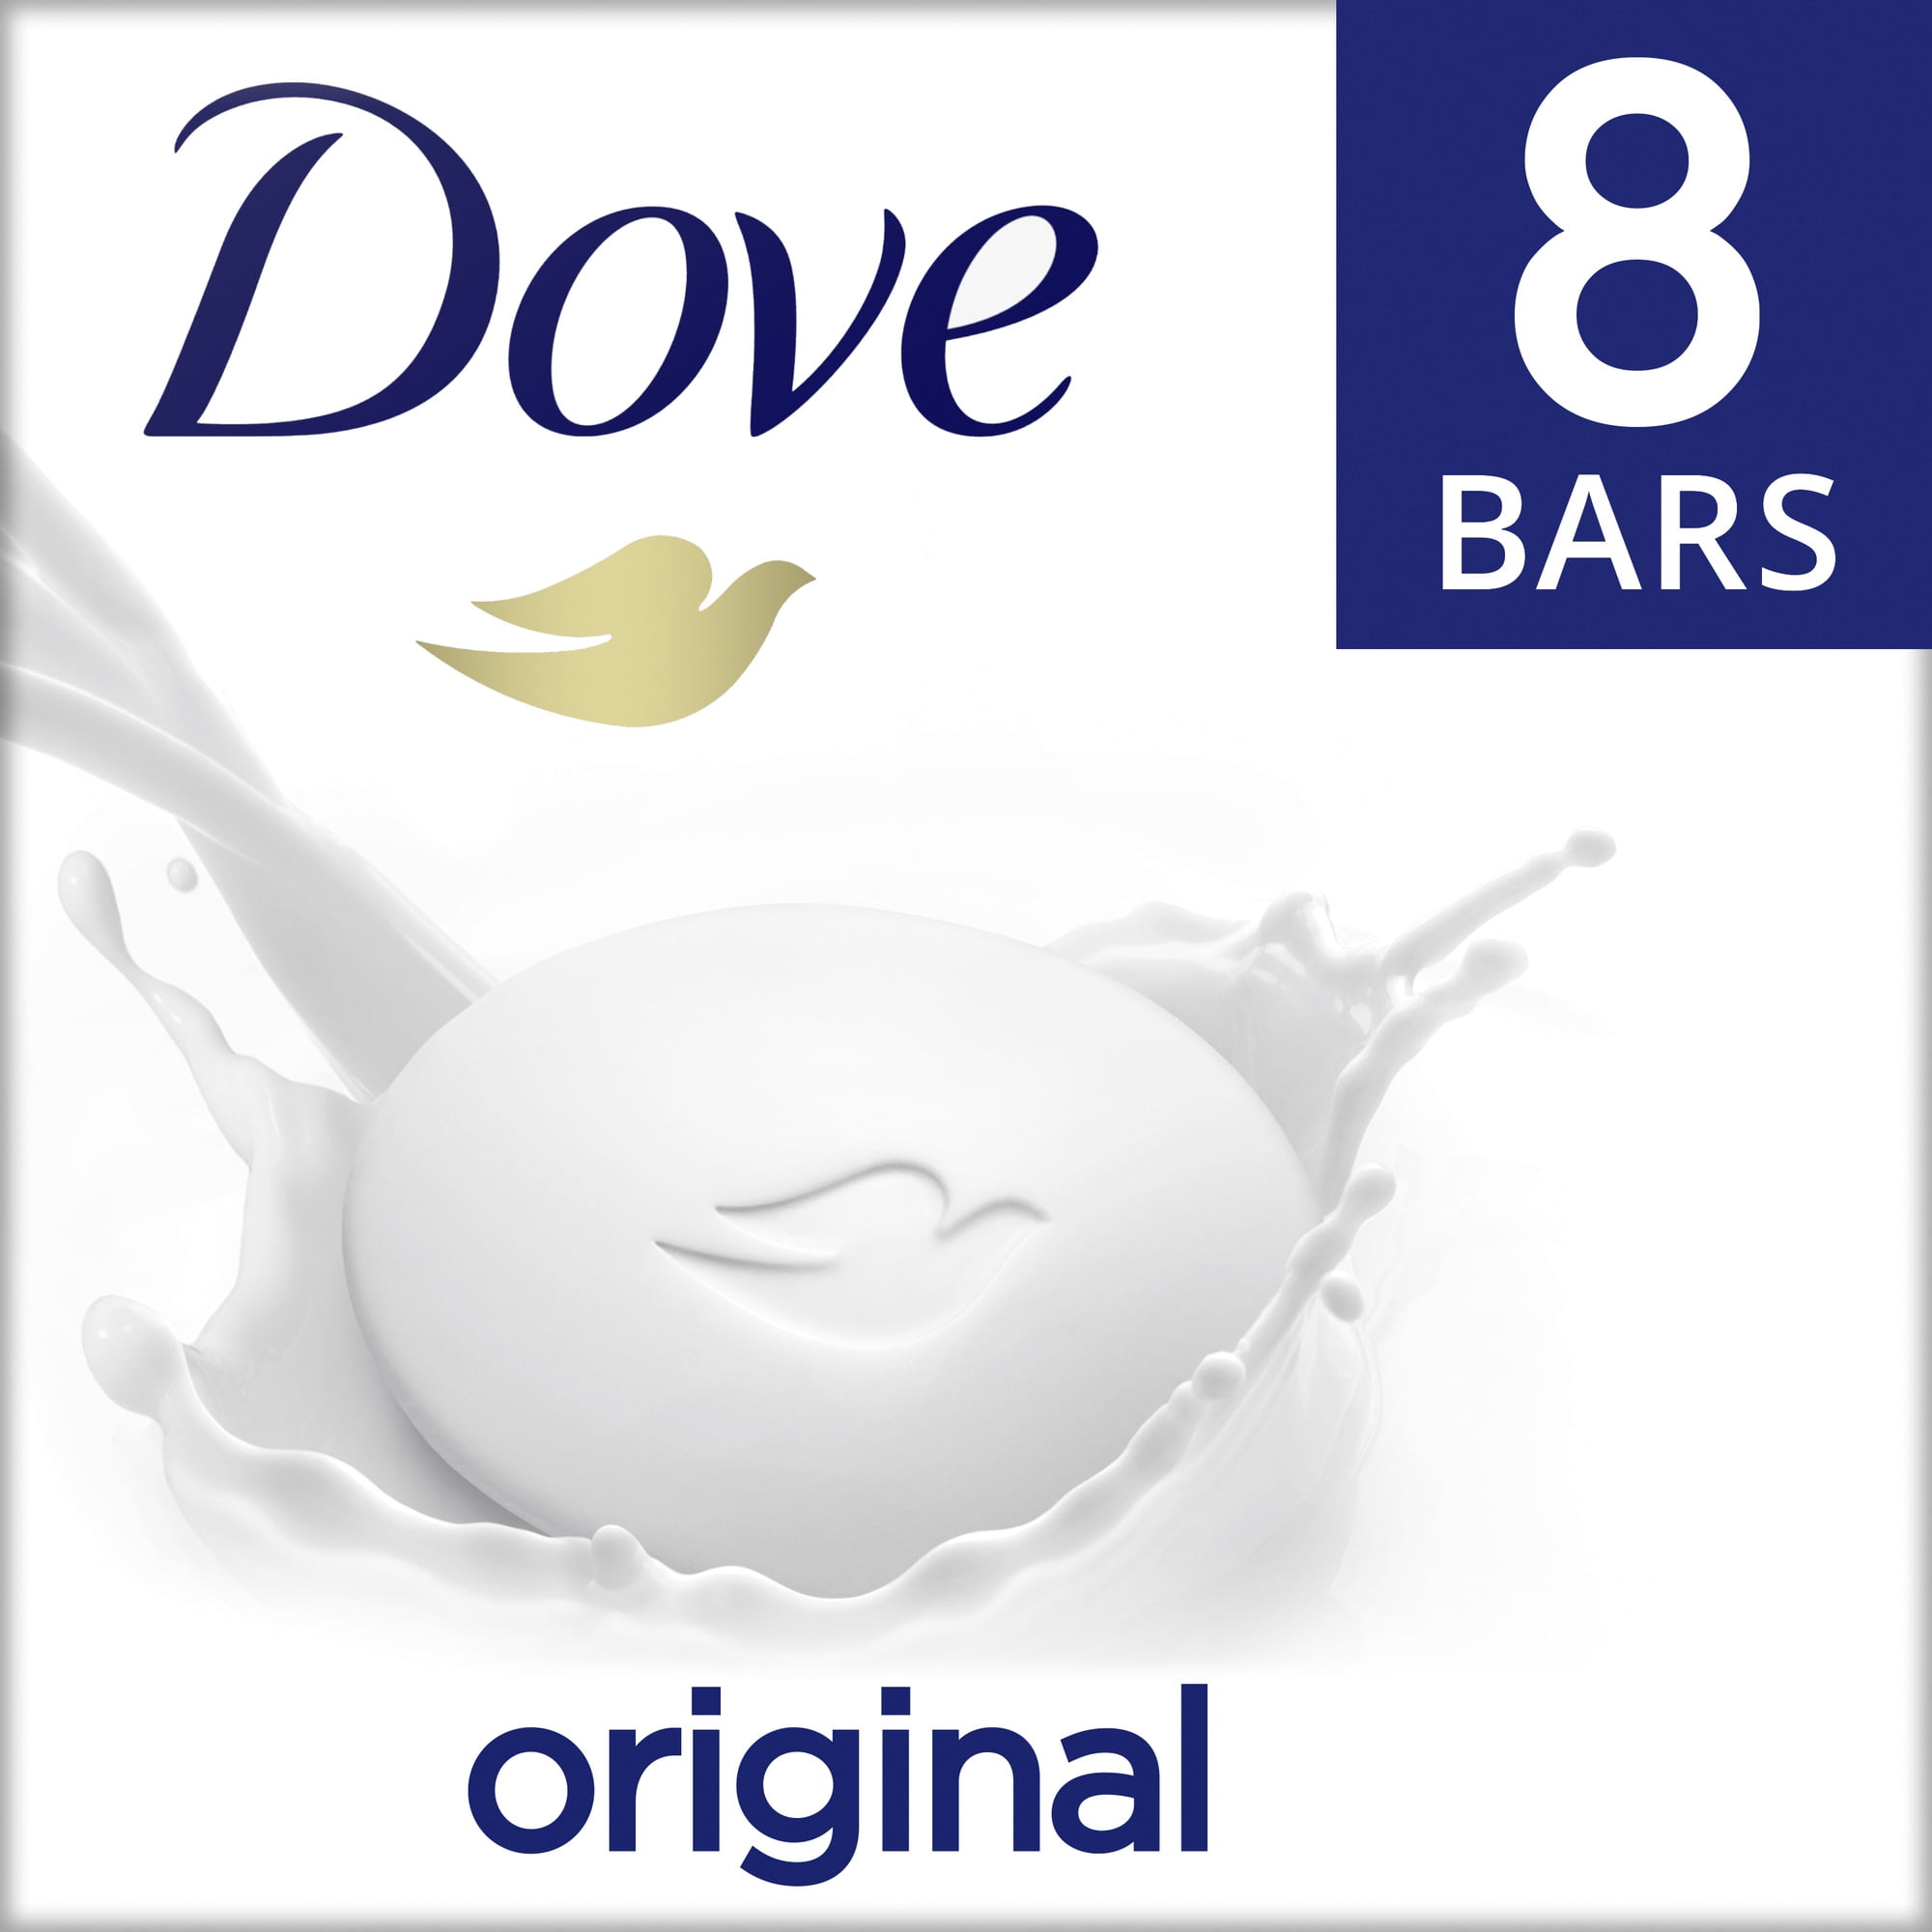 Dove Beauty Bar Gentle Skin Cleanser Original Made With 1/4 Moisturizing Cream, More Moisturizing Than Bar Soap 3.75 oz, 8 Bars